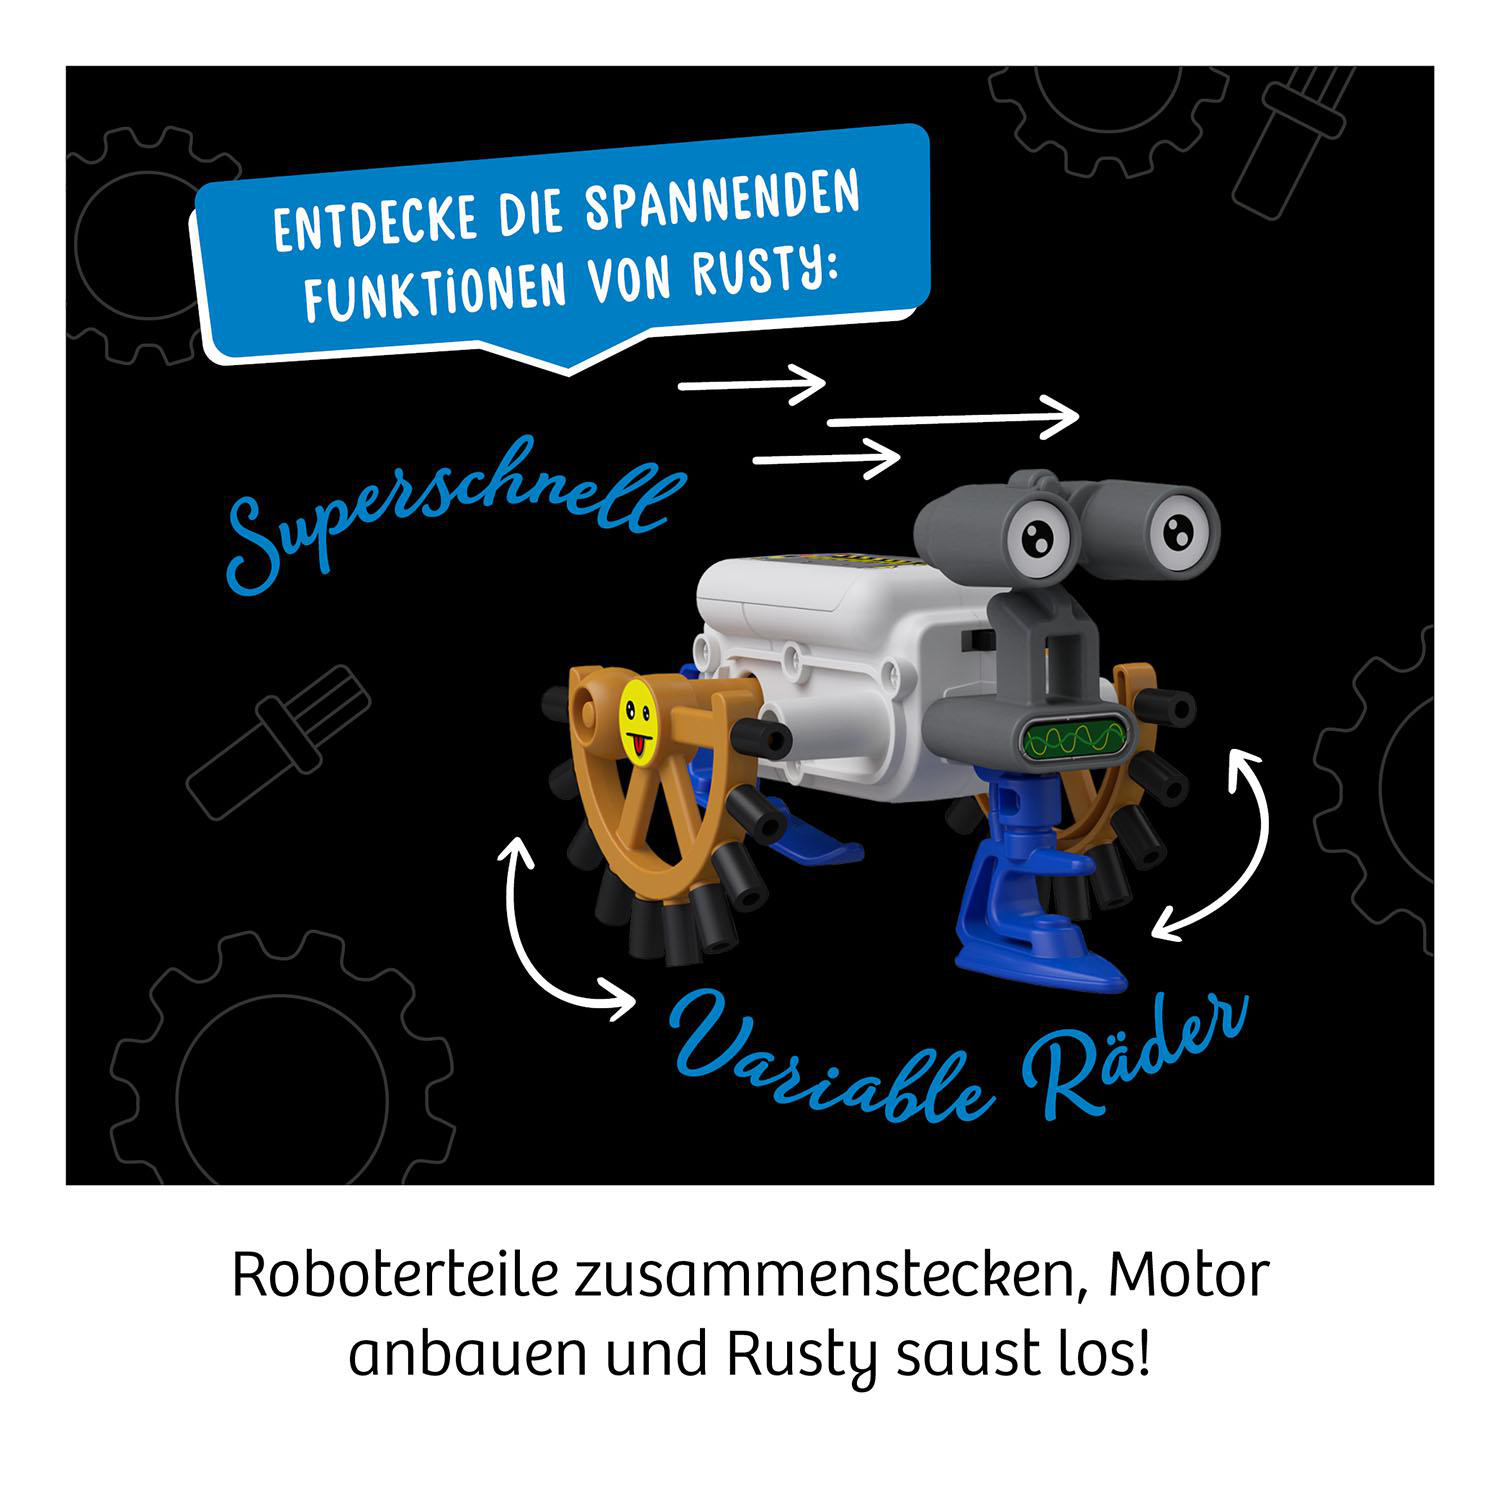 - Crawling-Bot der Spielzeug-Roboter, Mehrfarbig KOSMOS Rusty ReBotz